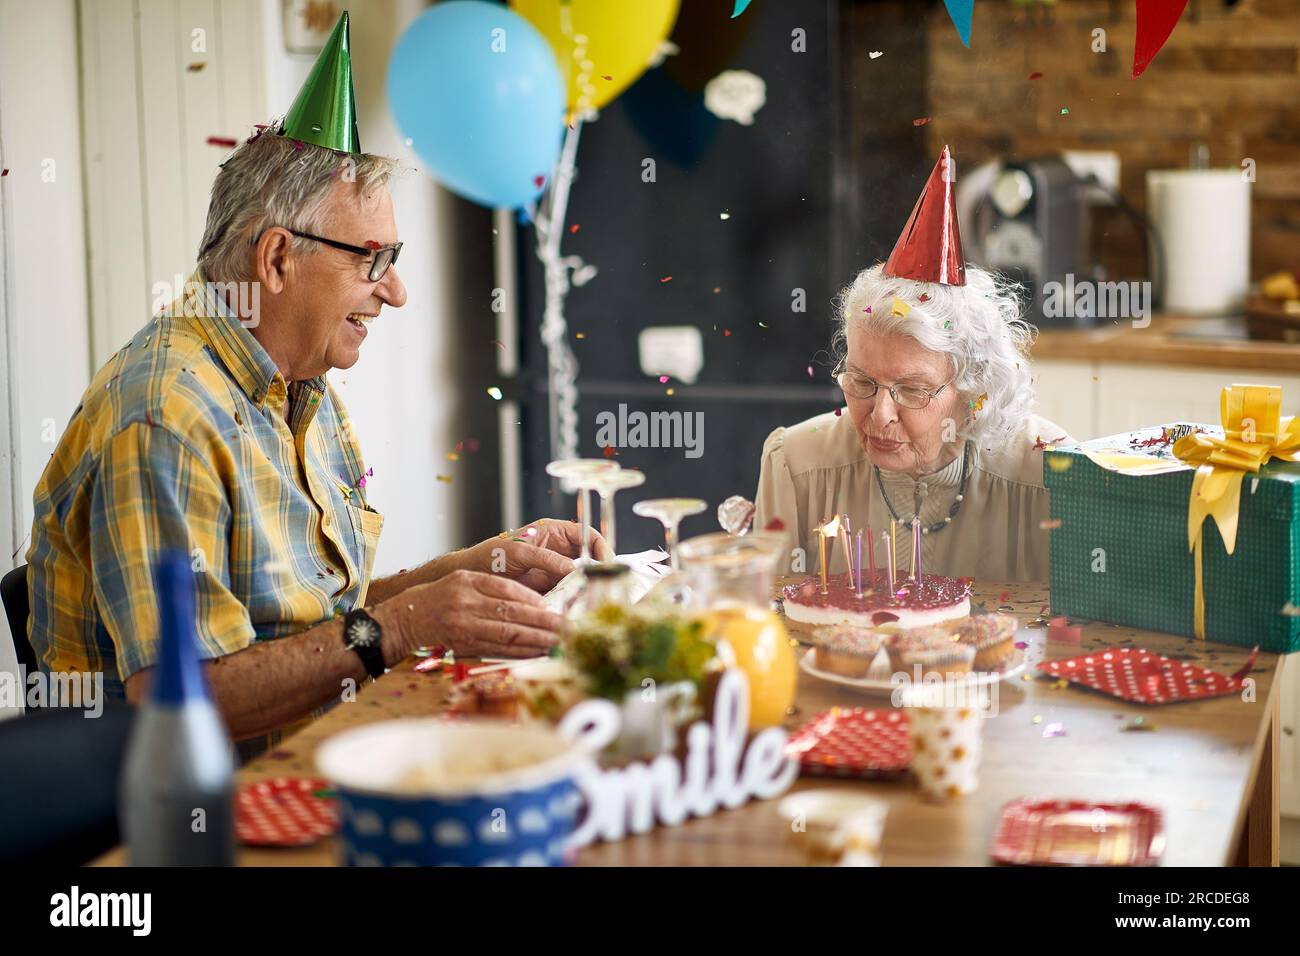 Joyful senior woman blowing candles on birthday cake, sitting at the kitchen table with her husband, celebrating her birthday. Lifestyle, senior life, Stock Photo